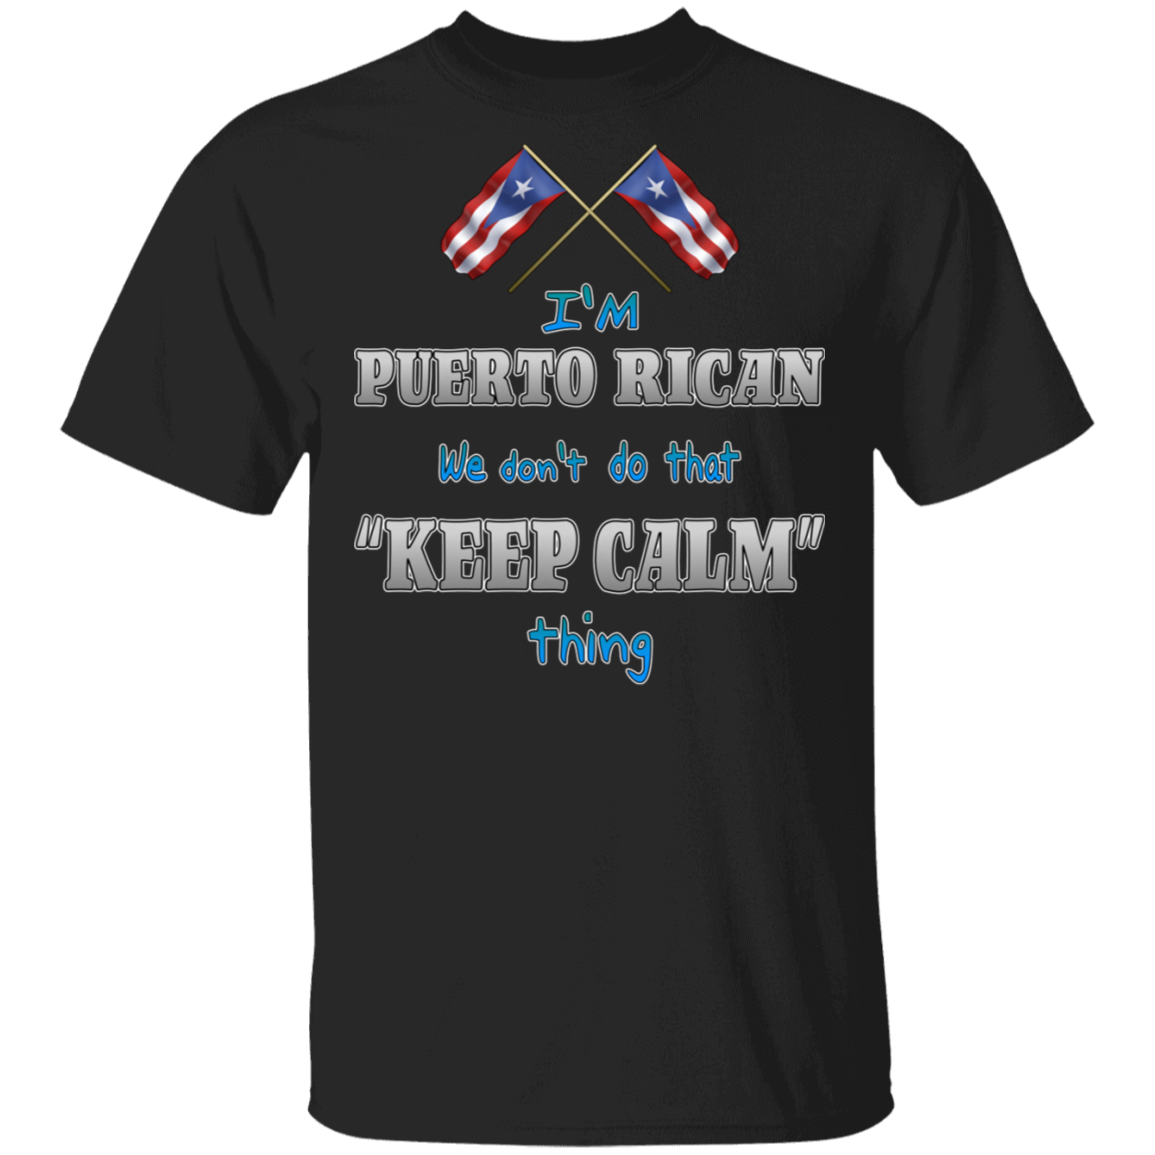 Don't Do Keep Calm 5.3 oz. T-Shirt - Puerto Rican Pride